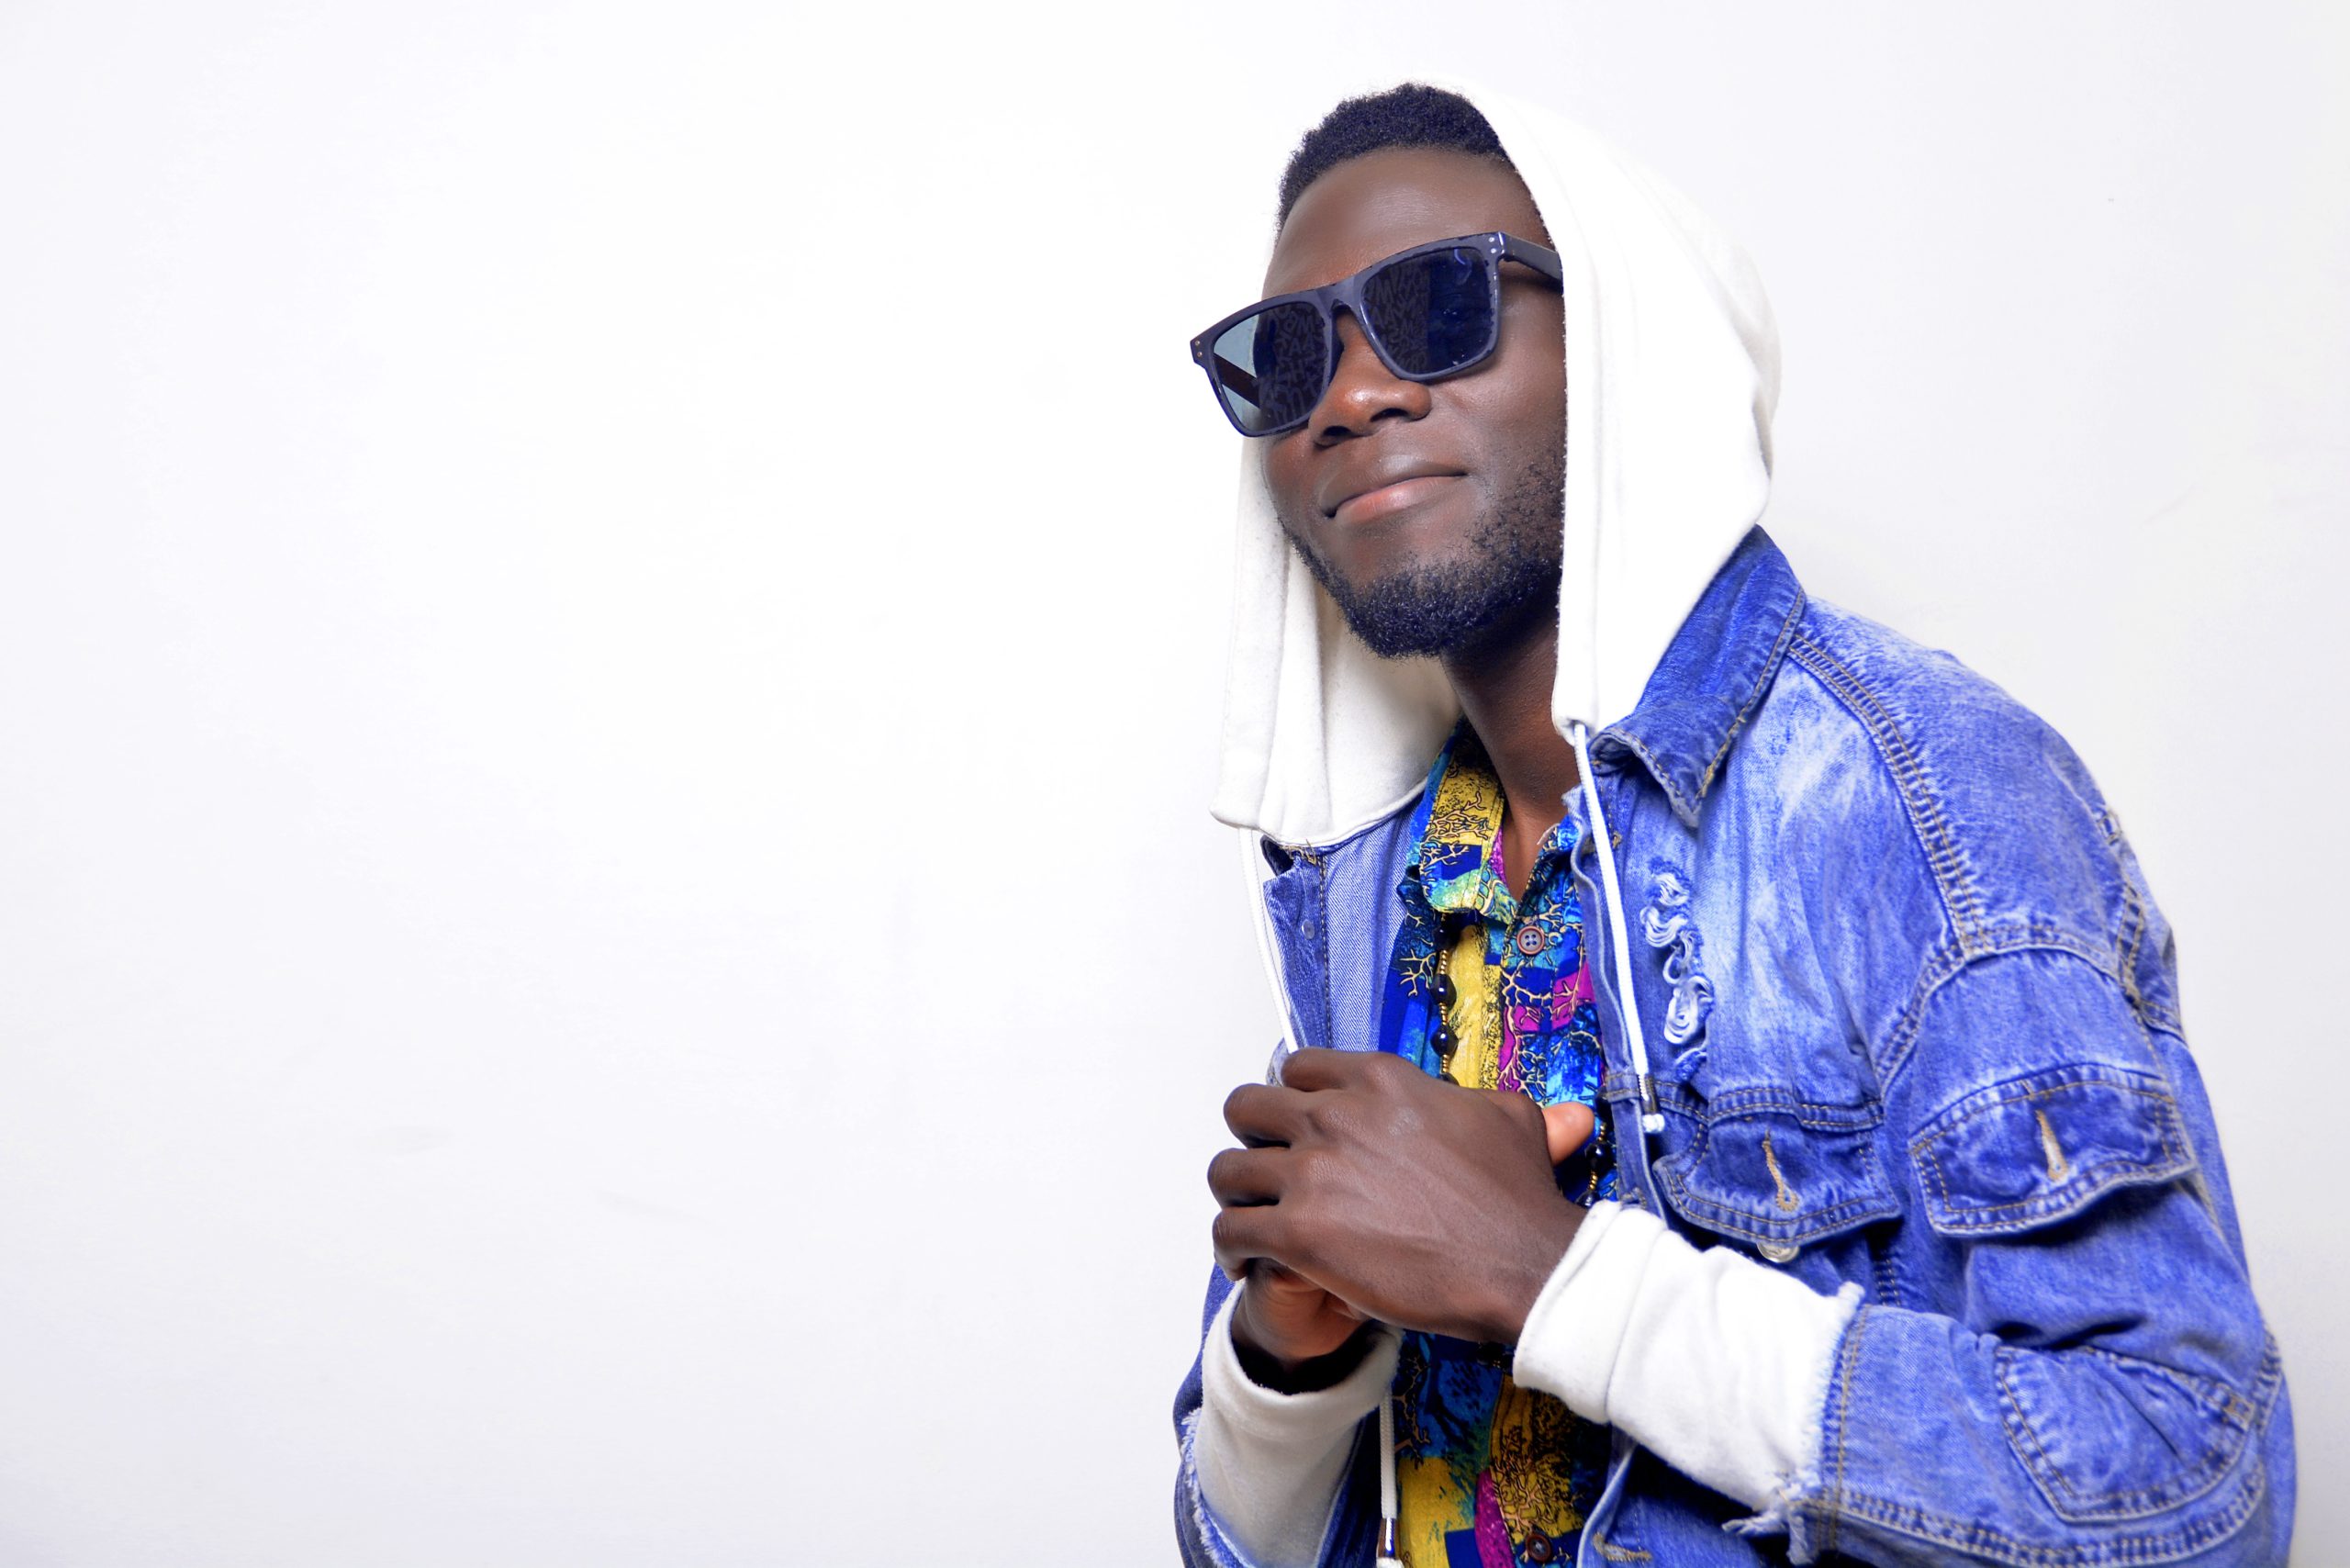 MESHACK: ‘My music advocates for social change in Uganda’